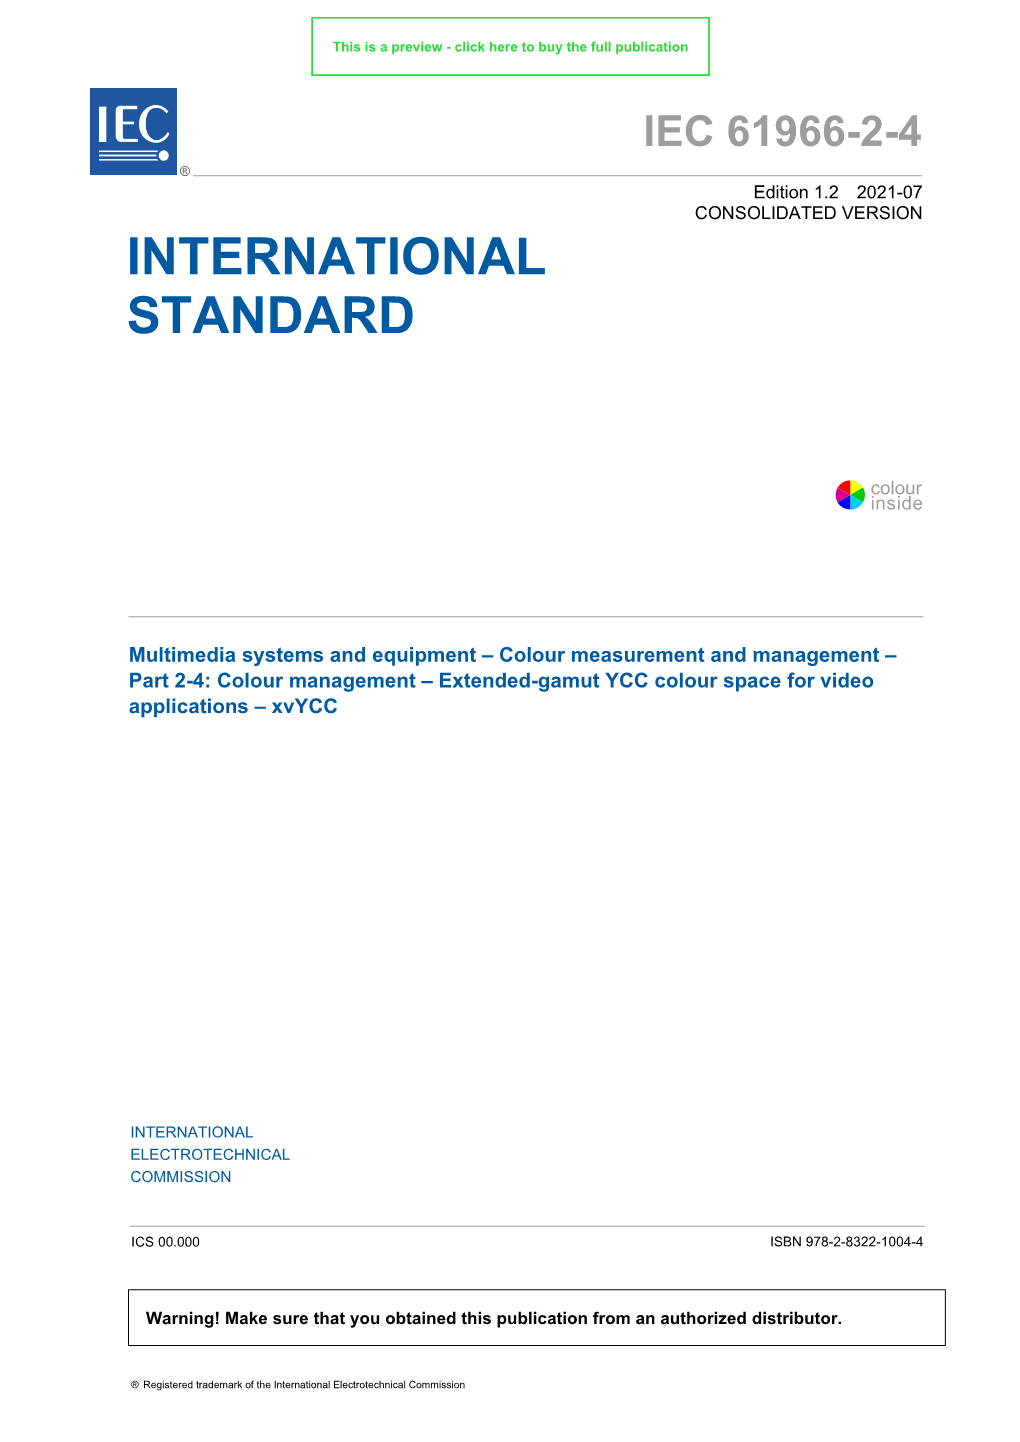 IEC 61966-2-4 ® Edition 1.2 2021-07 CONSOLIDATED VERSION INTERNATIONAL STANDARD